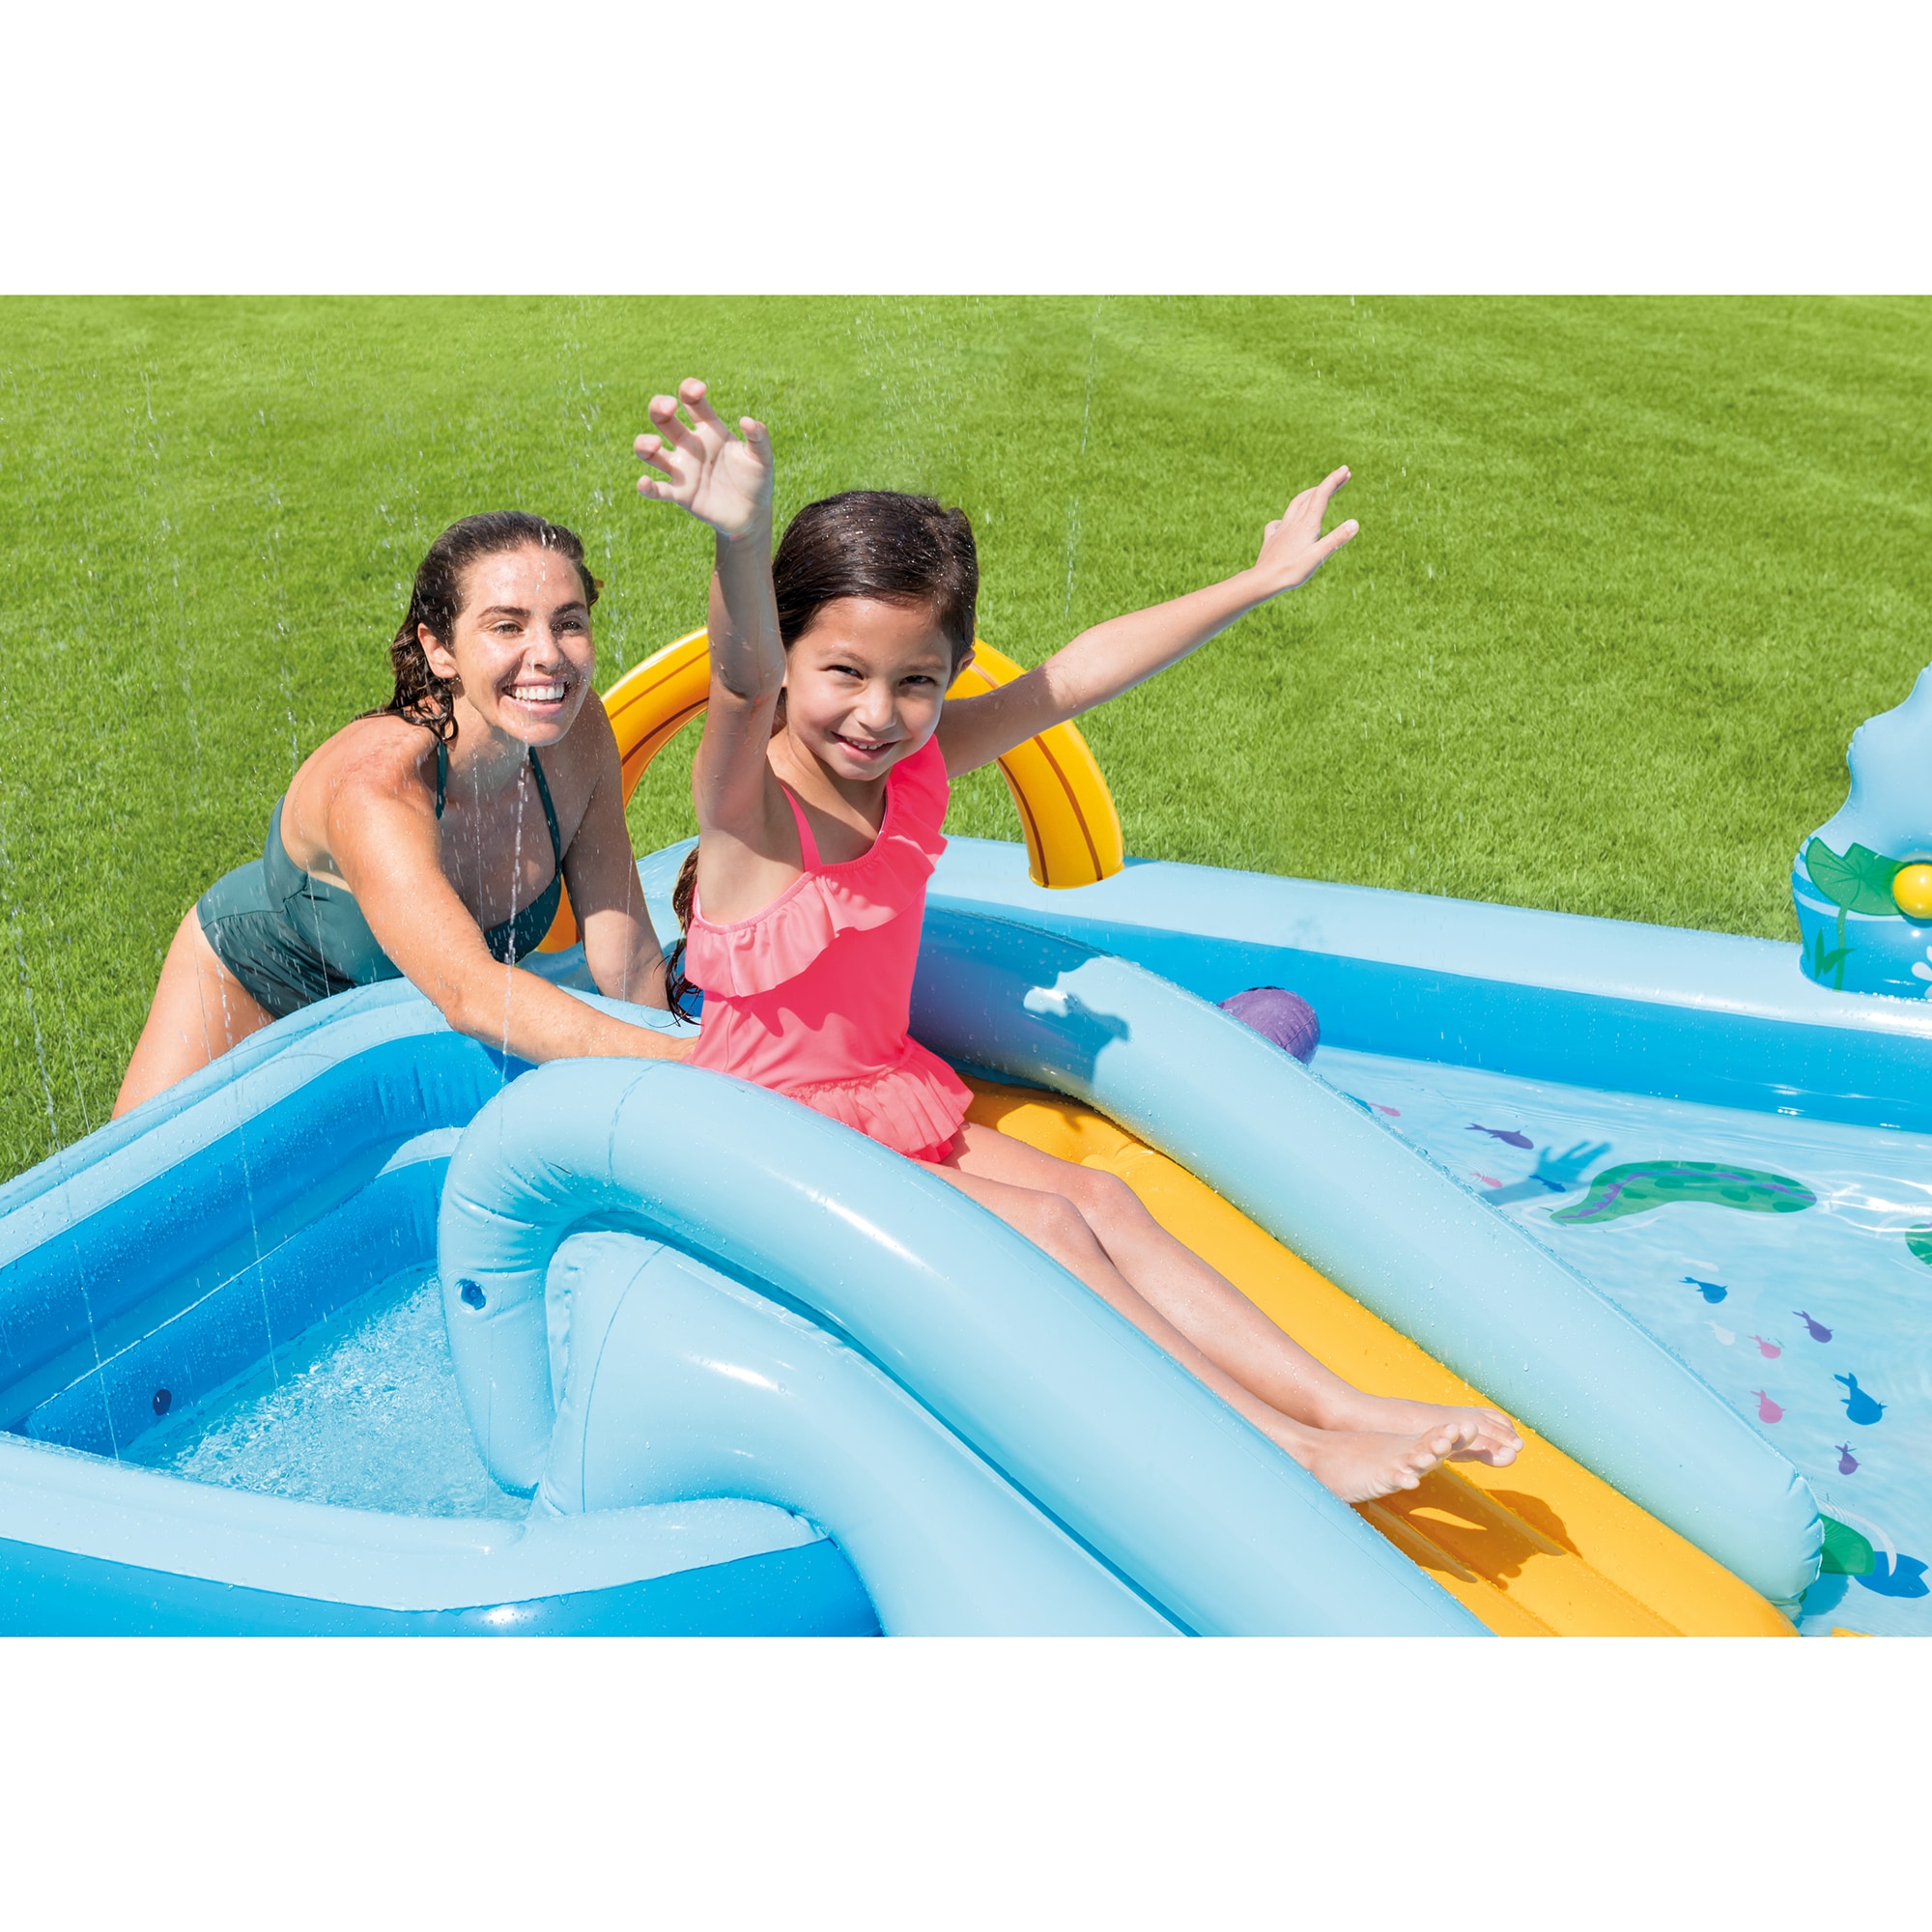 Intex Jungle Inflatable Swimming Pool Play Center Slide Sprayer Kid 7 X 6 X 4 FT 